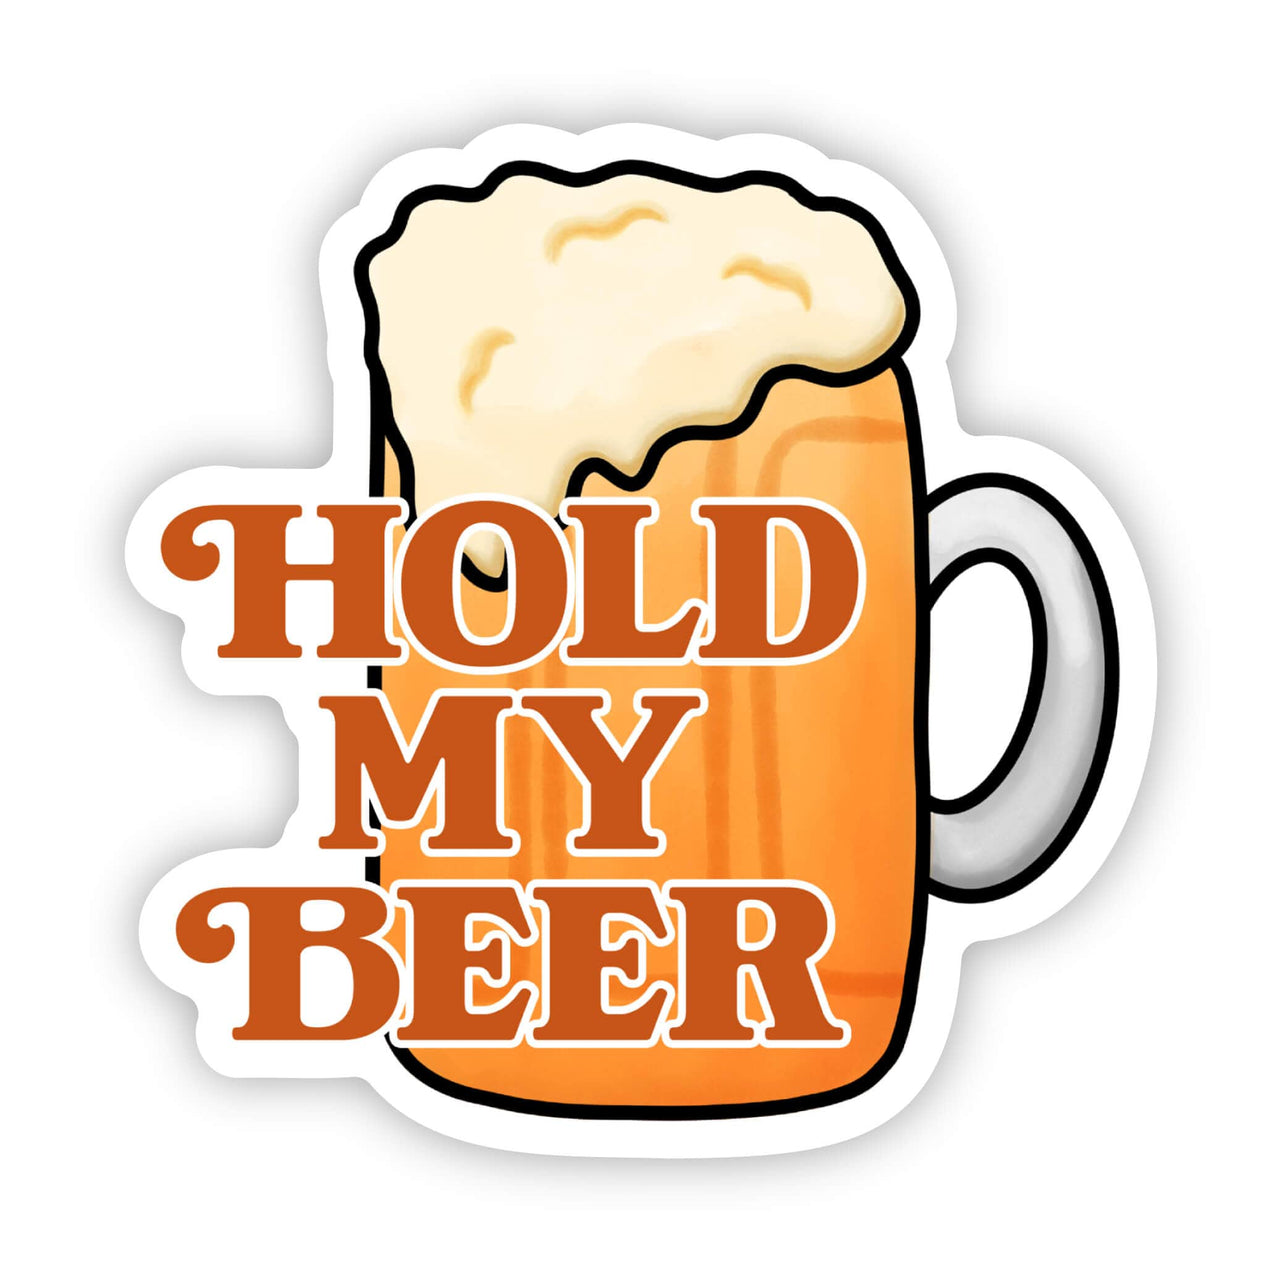 "Hold my beer" sticker